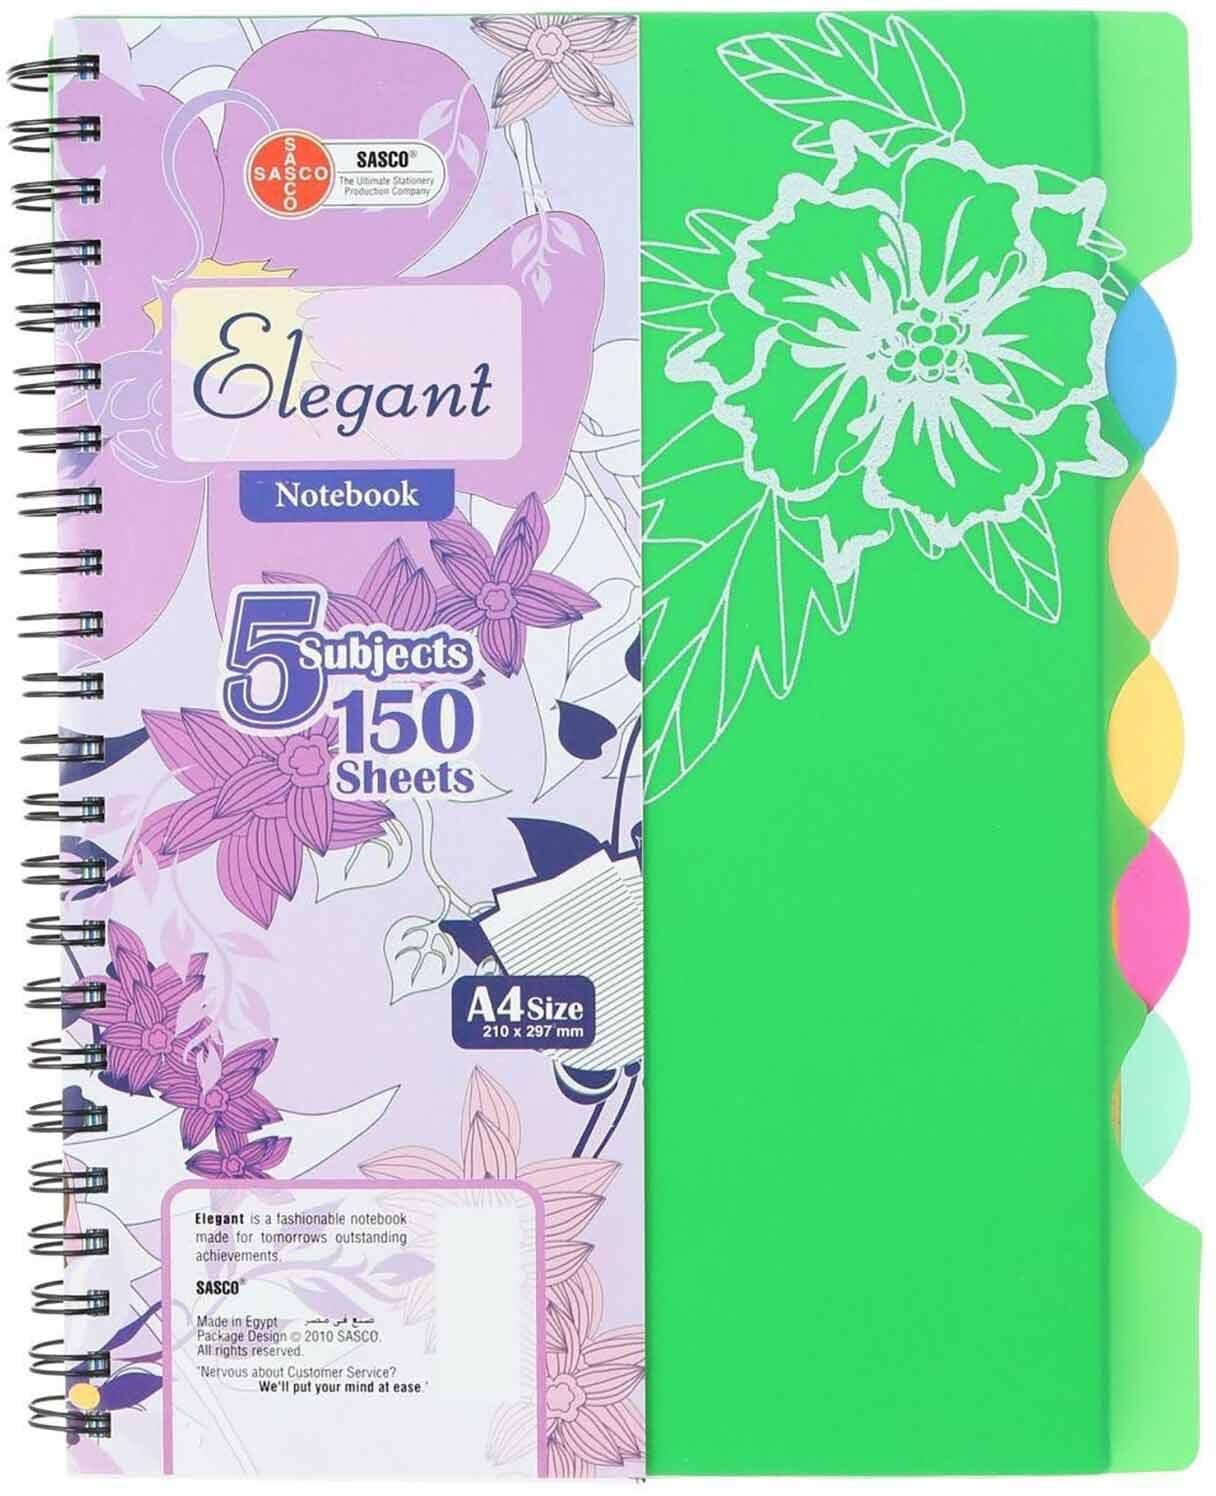 Sasco Elegant A4 Notebook - 150 Sheets - 5 Subjects - Green